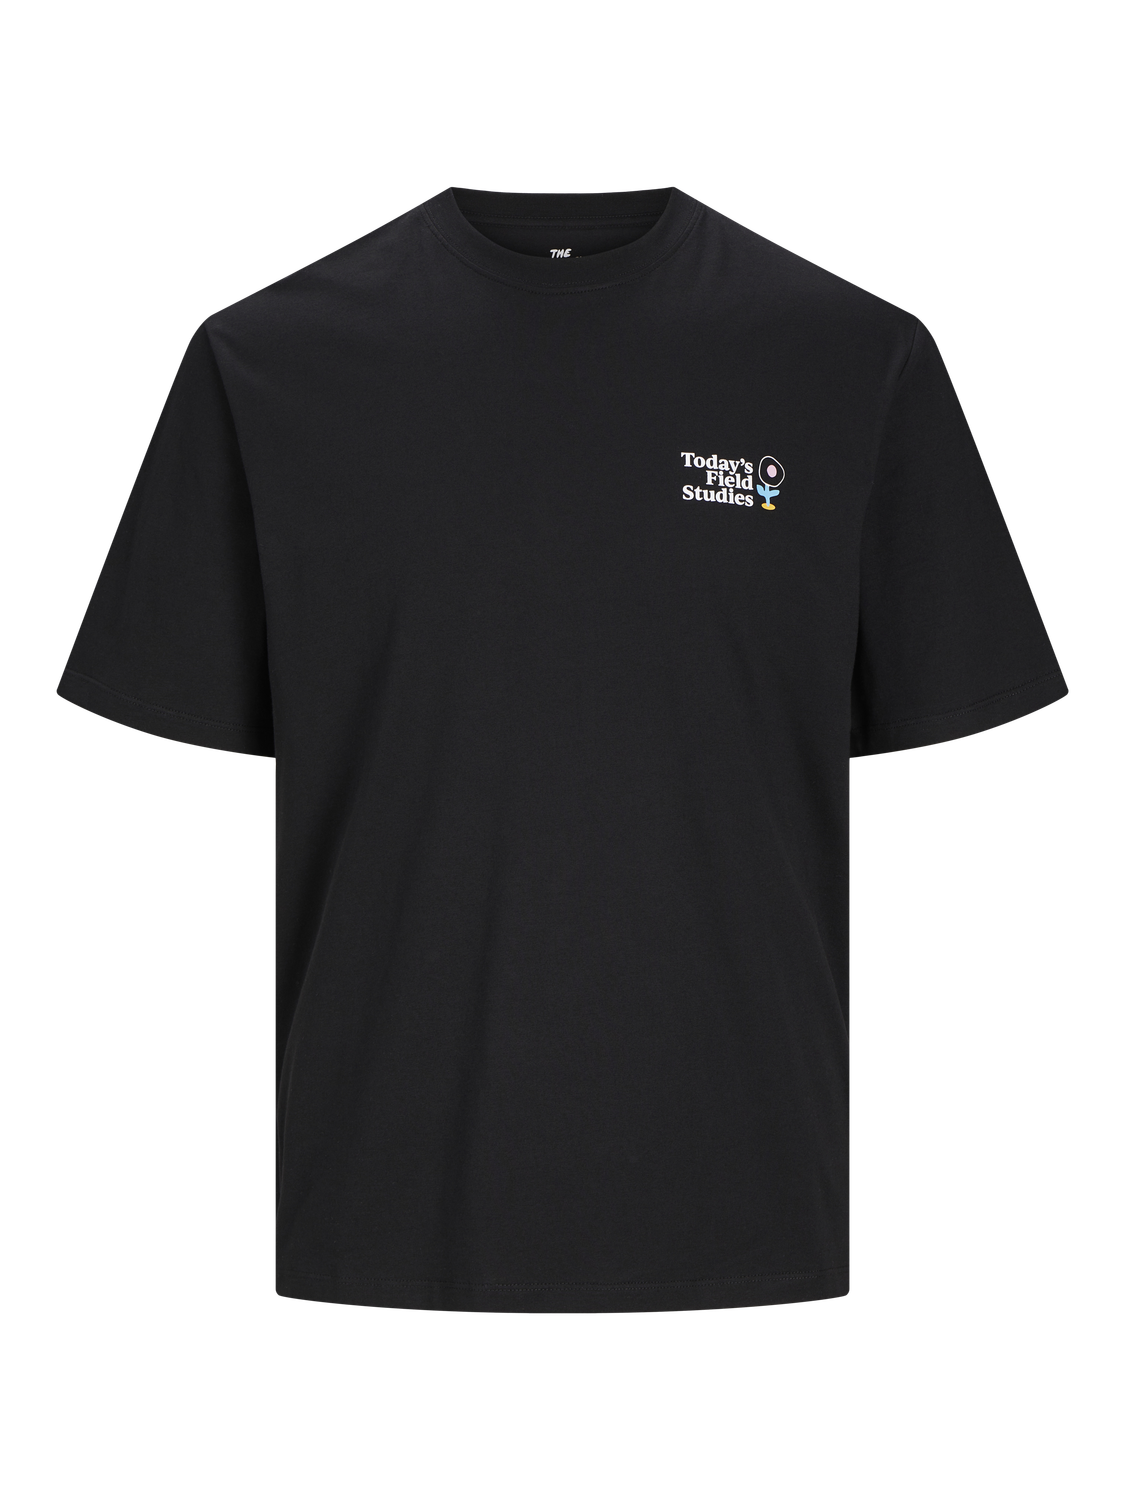 Jack & Jones T-shirt Estampar Decote Redondo -Black - 12263606